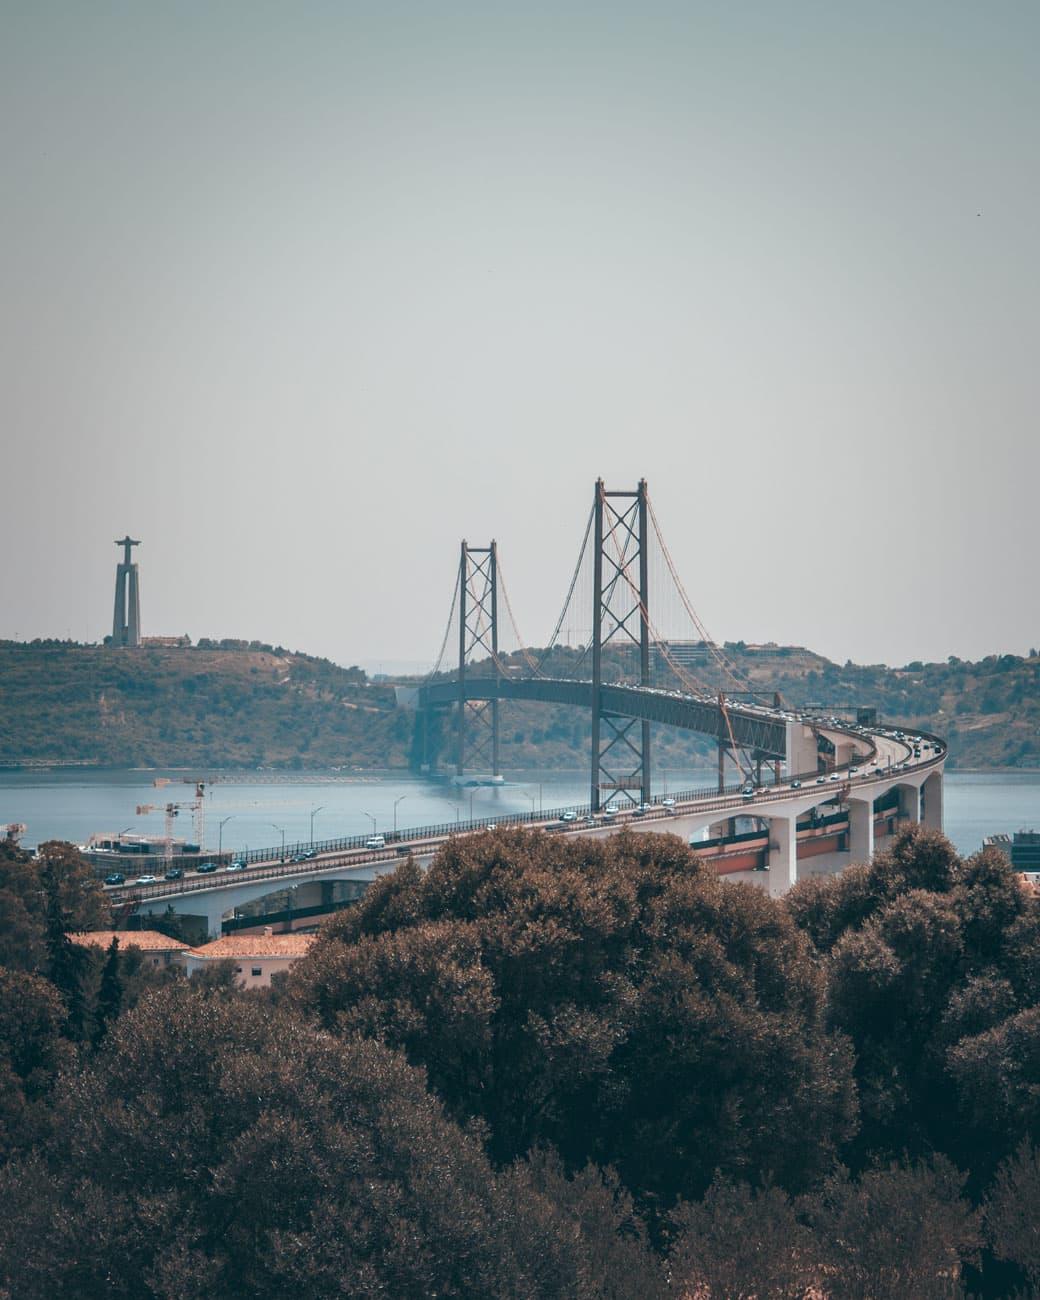 Alvito viewpoint in Lisbon